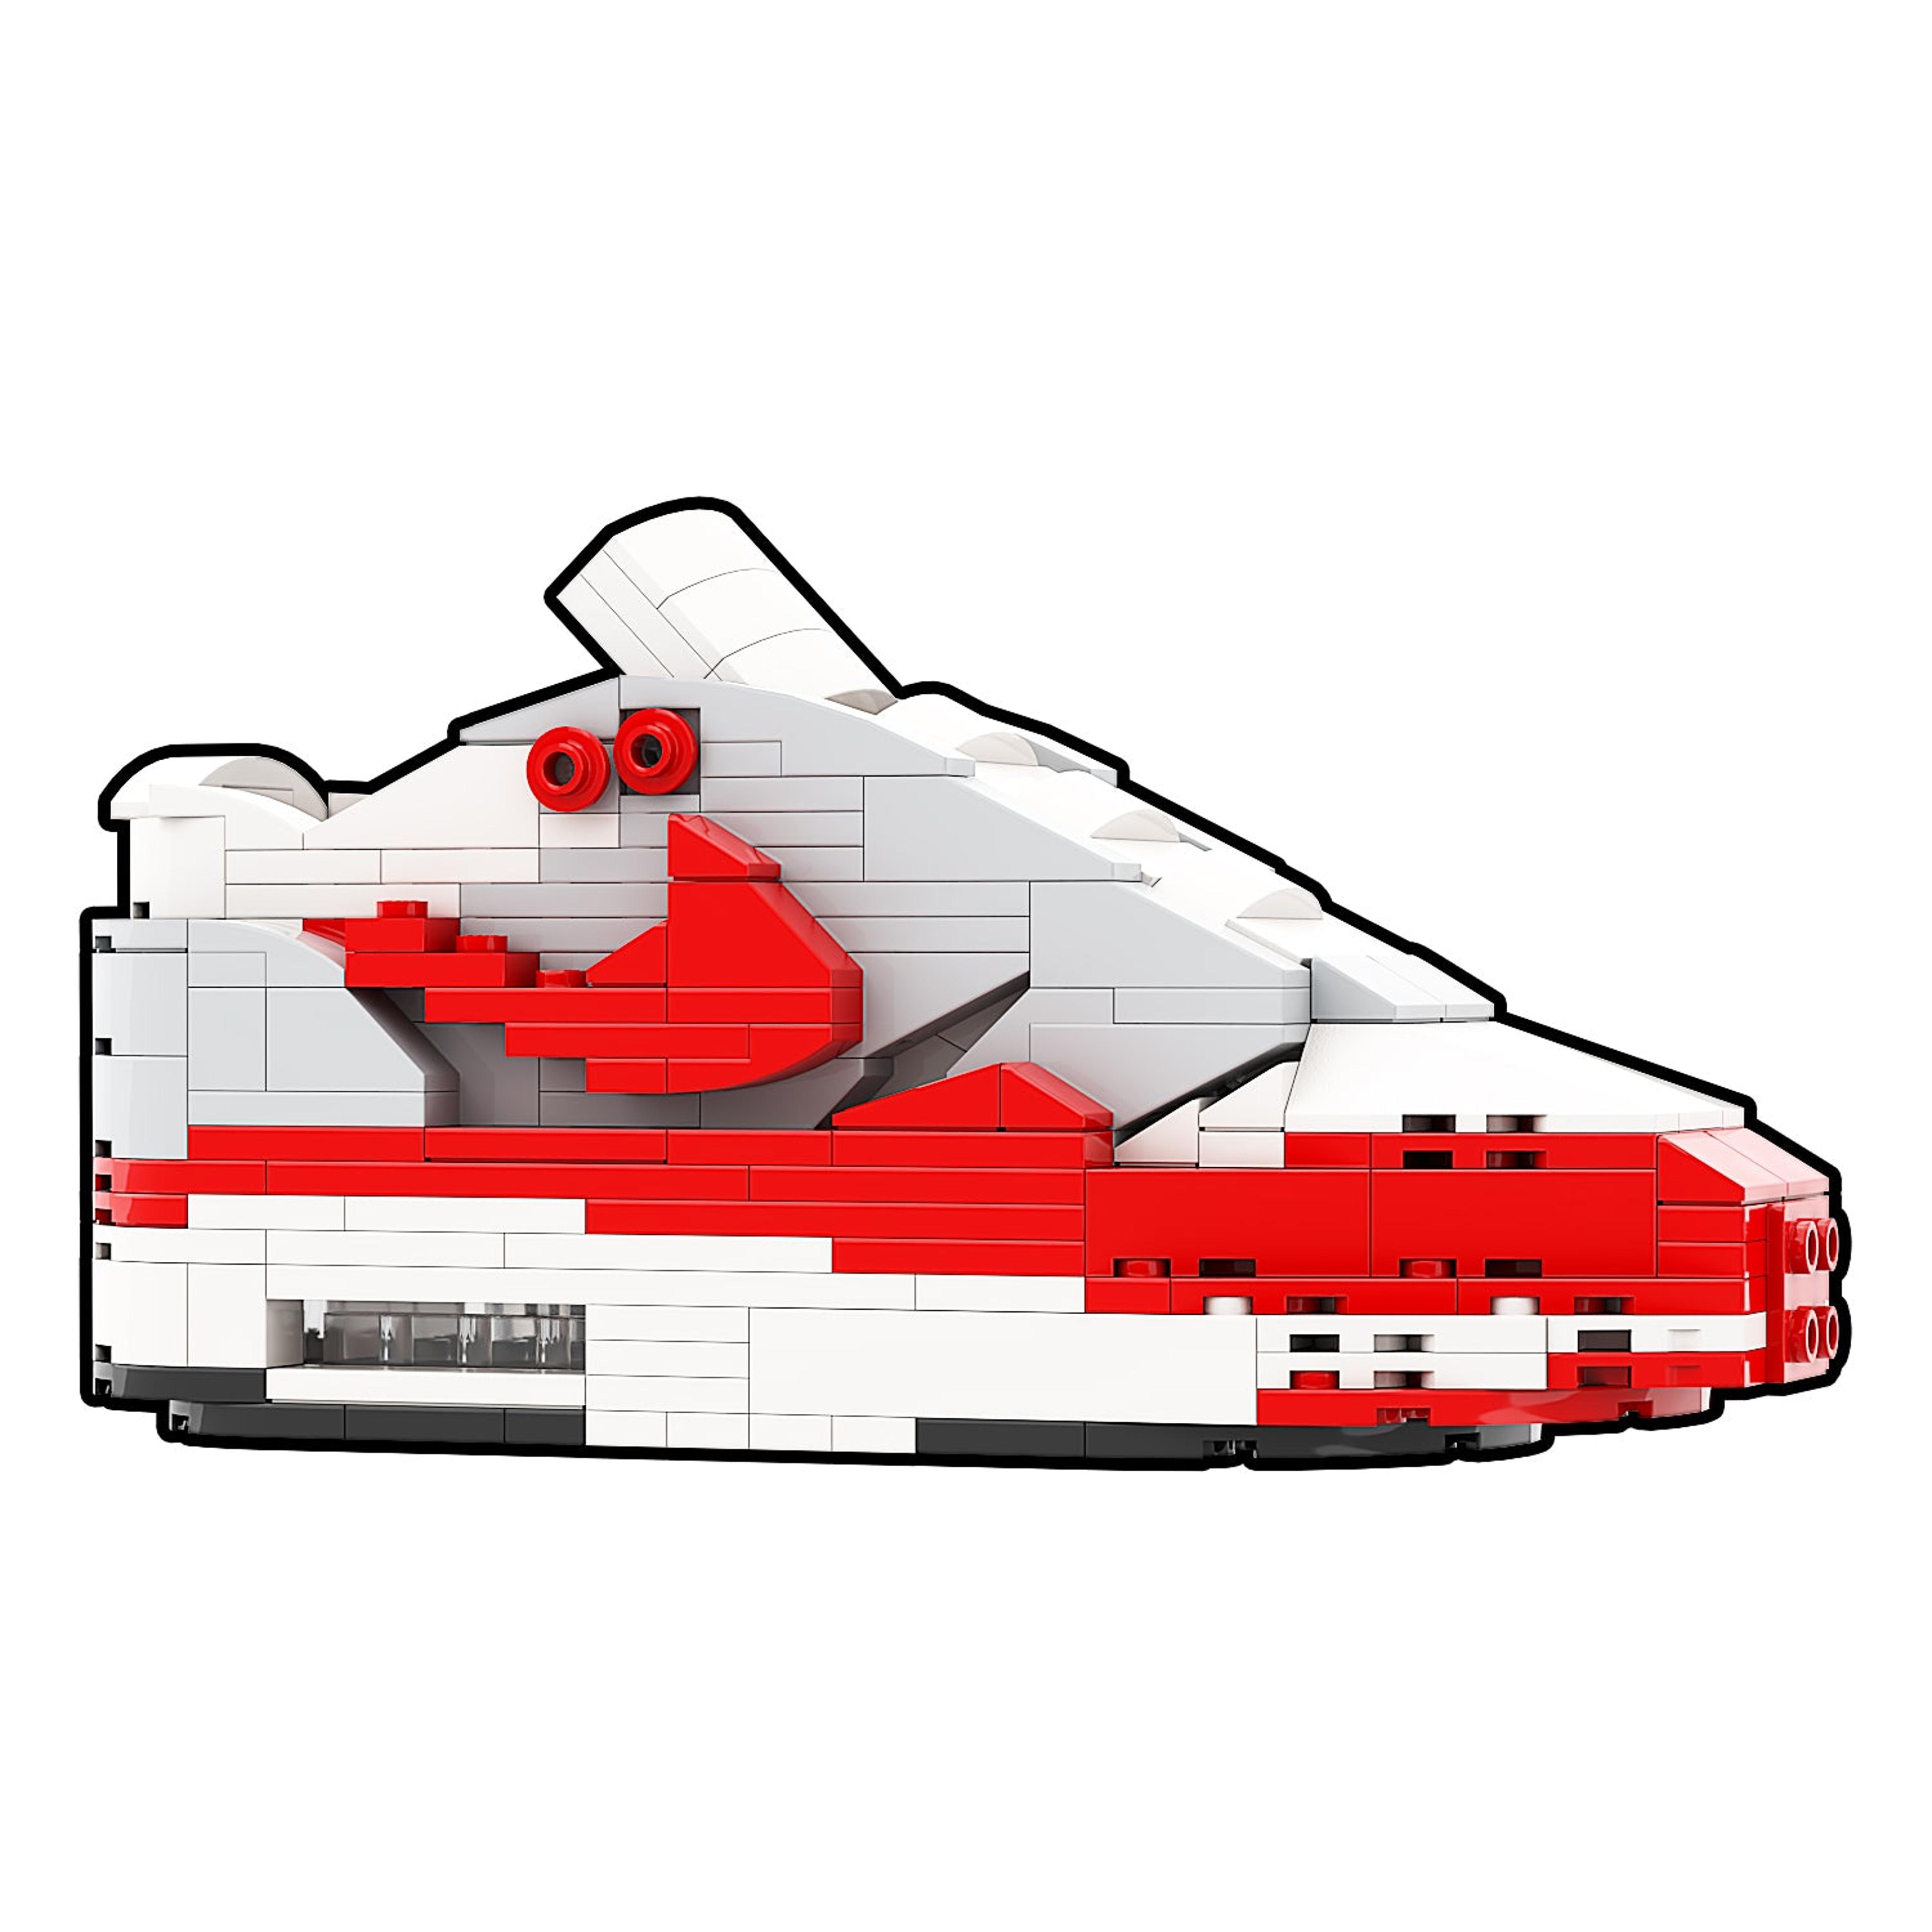 Alternate View 5 of REGULAR "Air Max 1 OG" Sneaker Bricks with Mini Figure